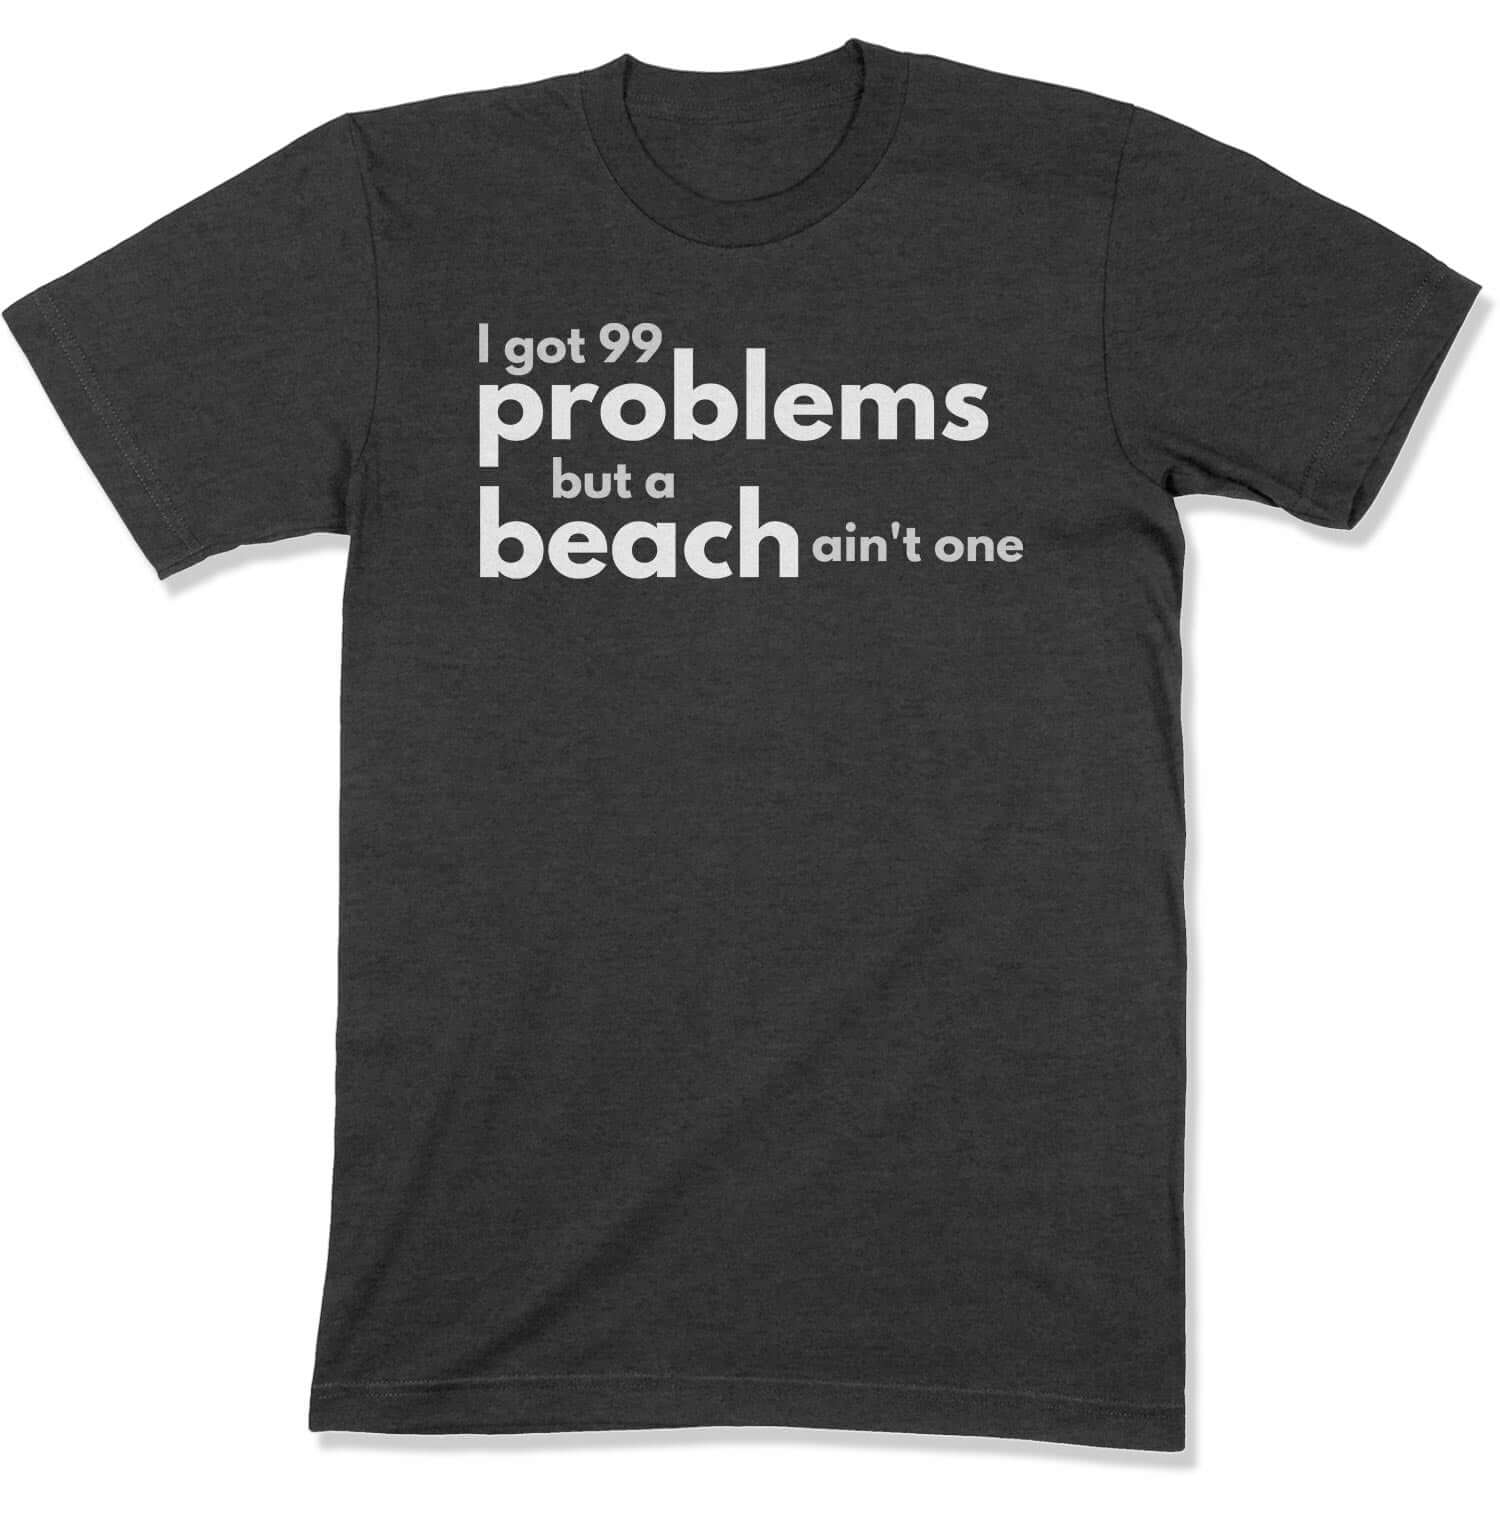 99 Problems Unisex T-Shirt in Color: Dark Grey Heather - East Coast AF Apparel